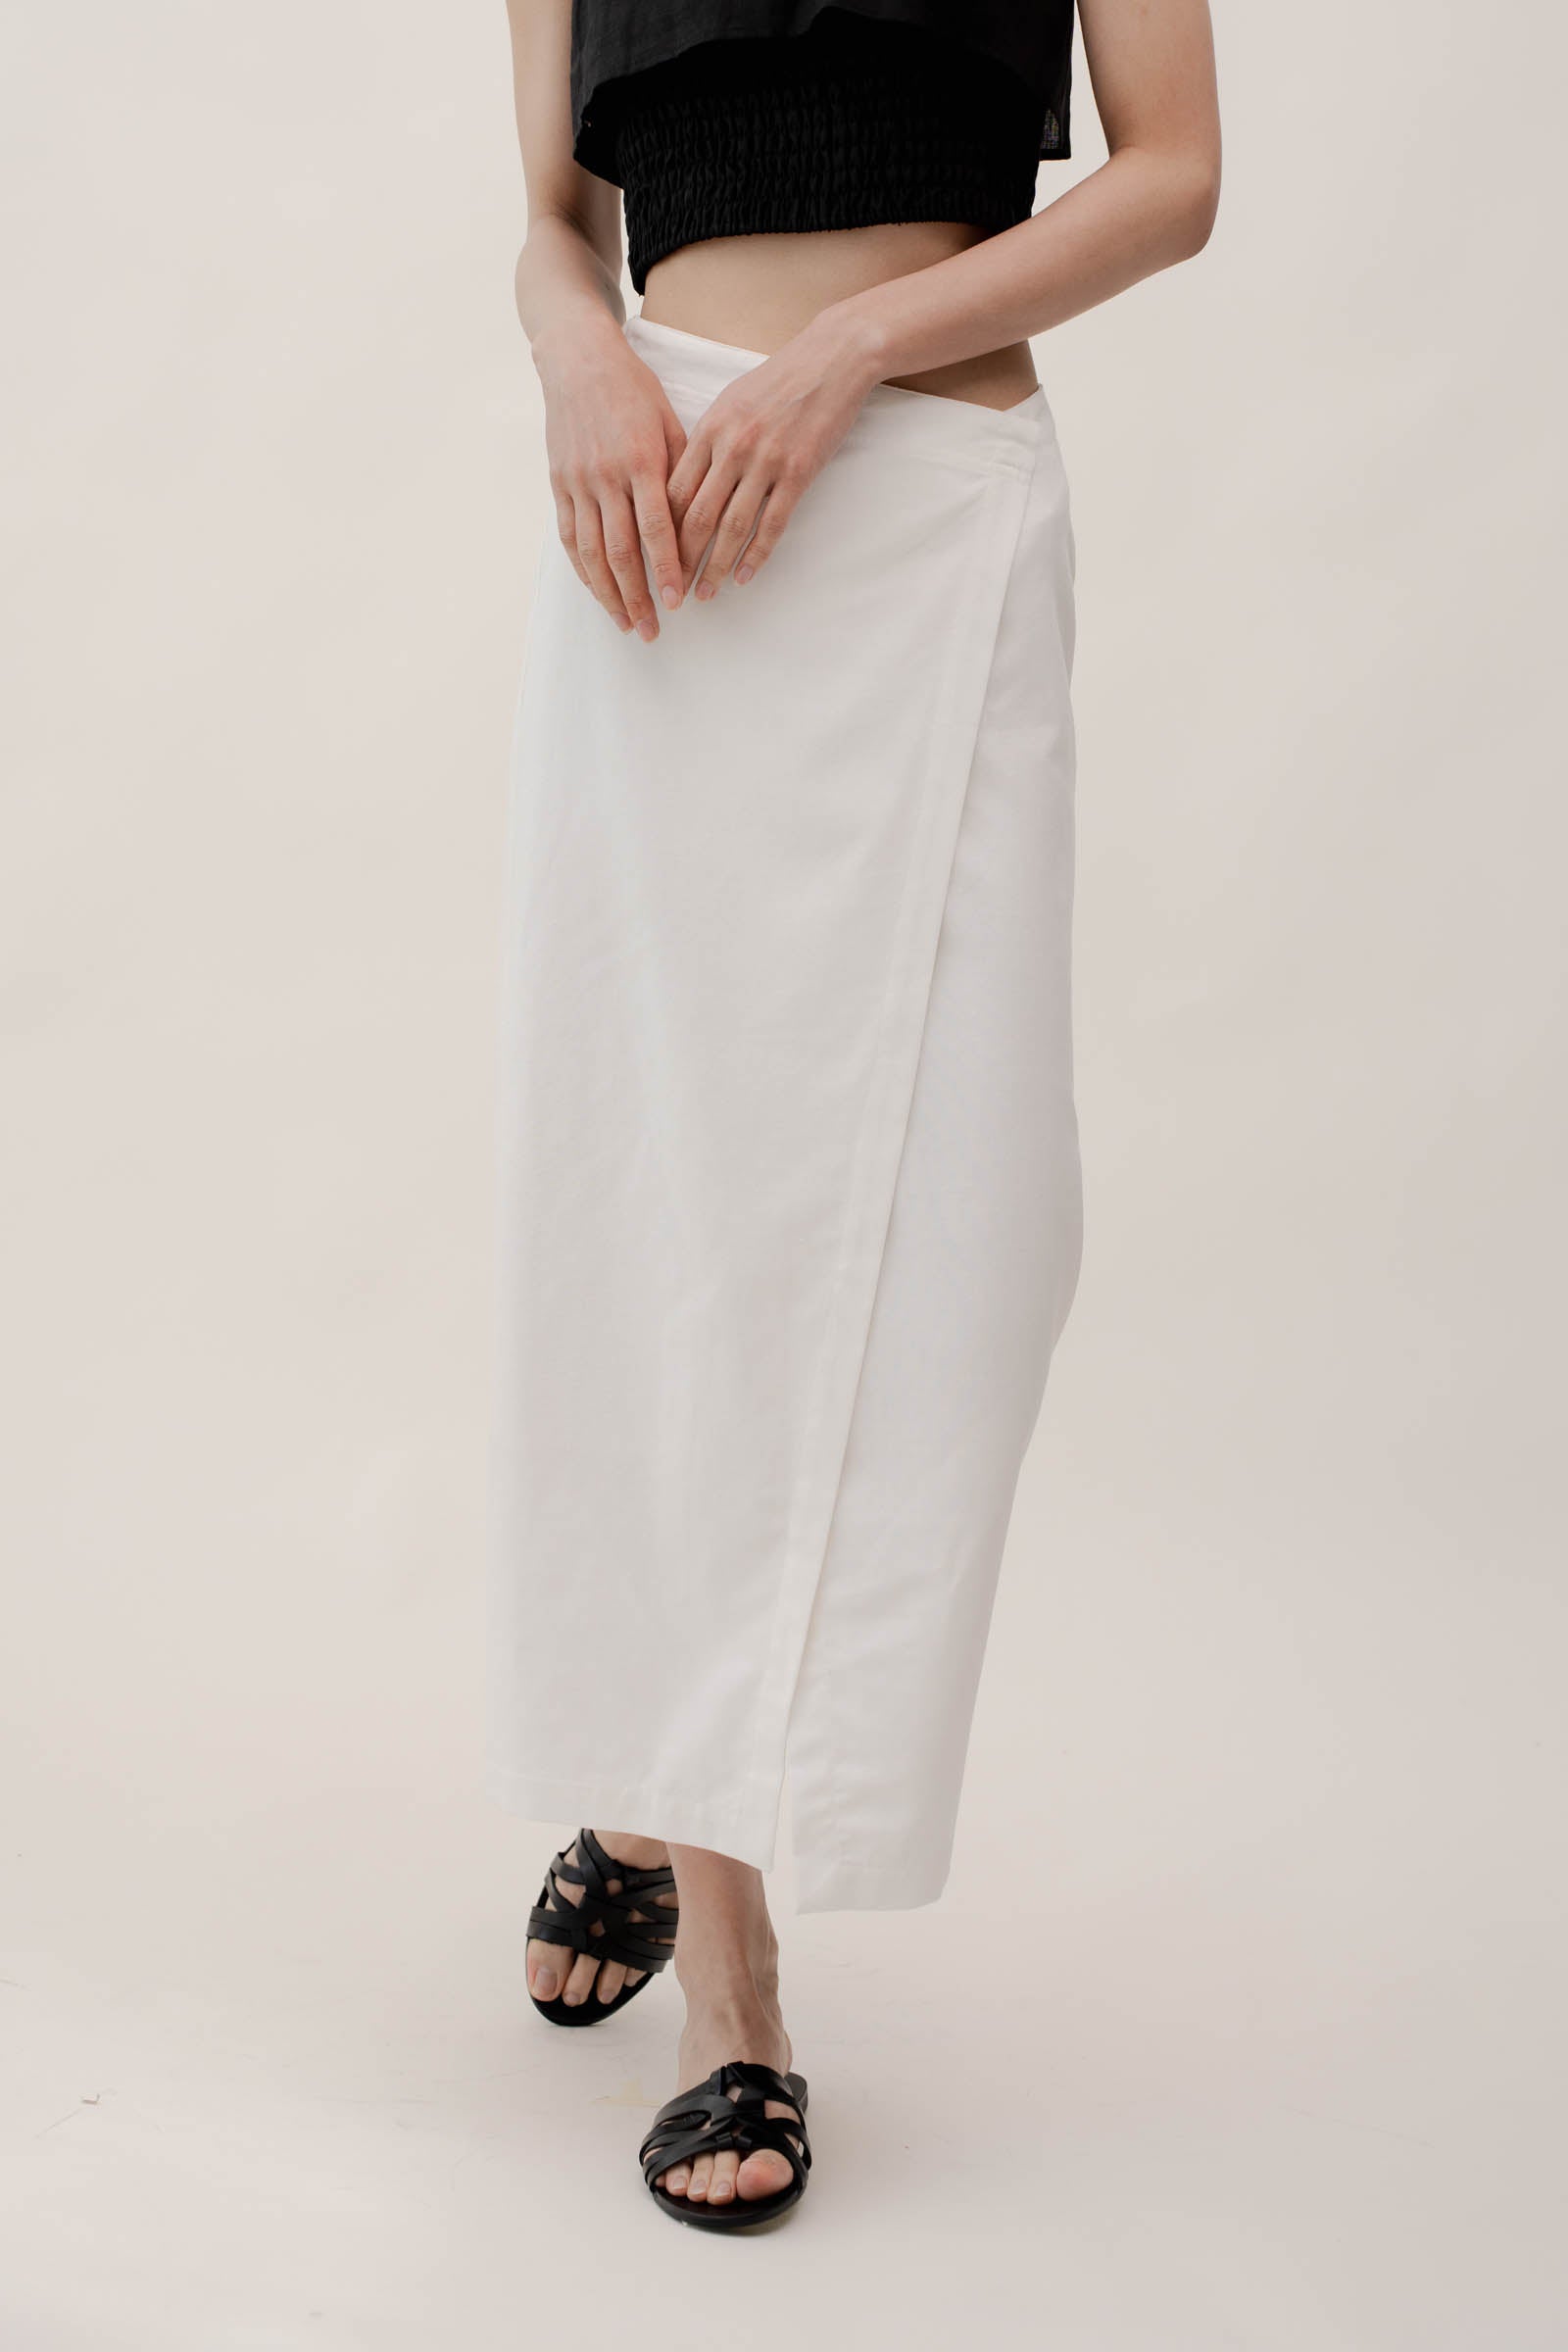 SADIE Skirt - White